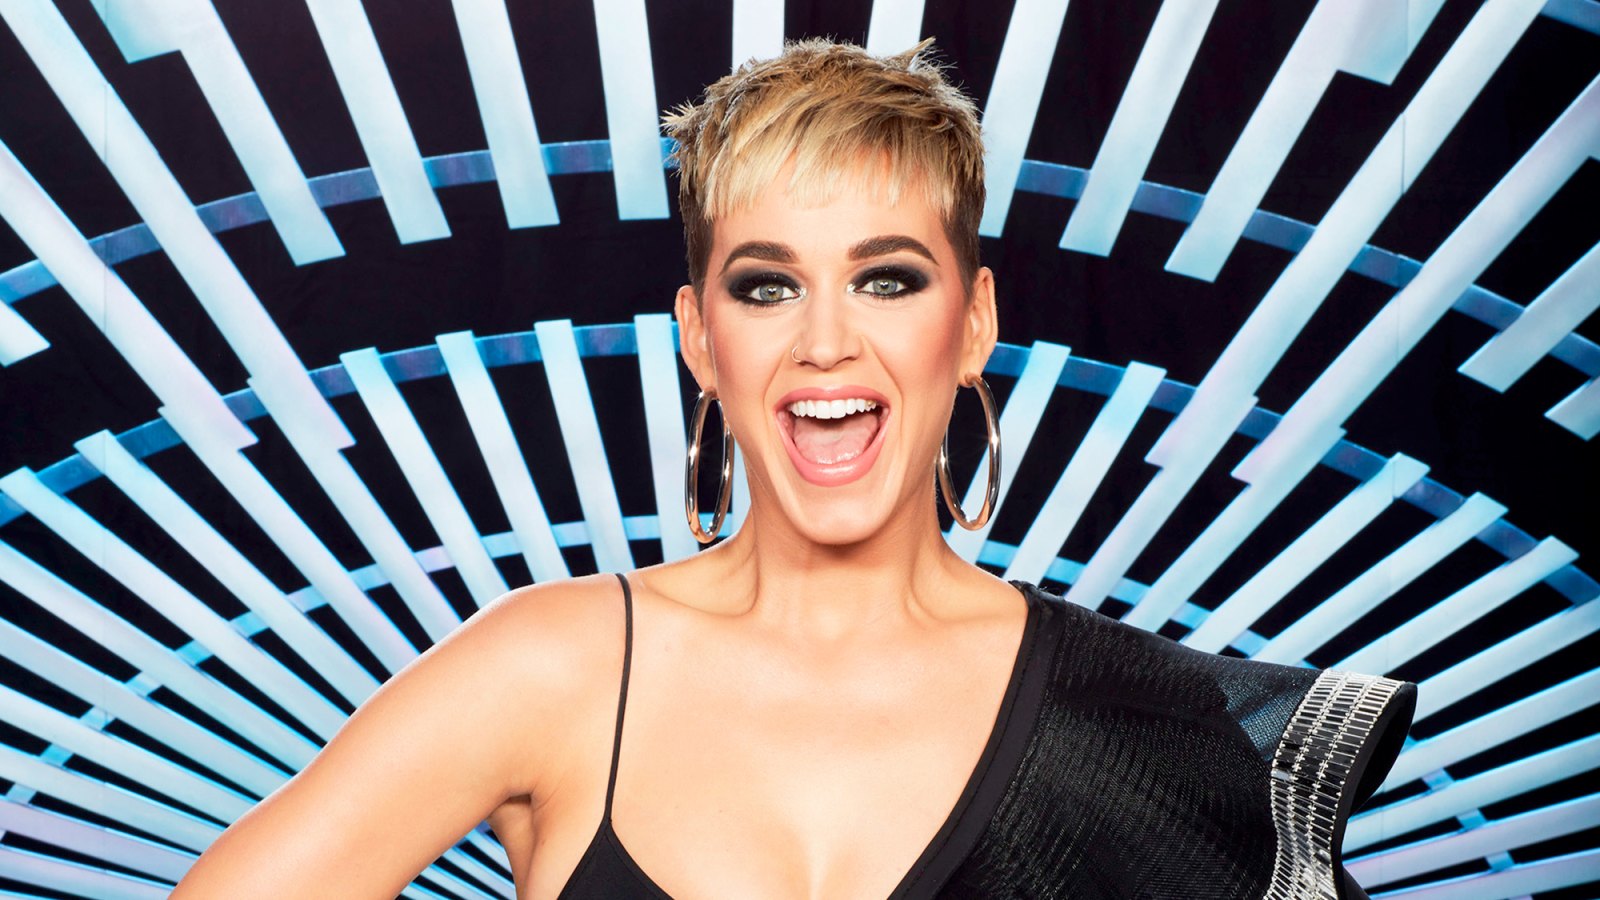 ‘American Idol‘ judge Katy Perry